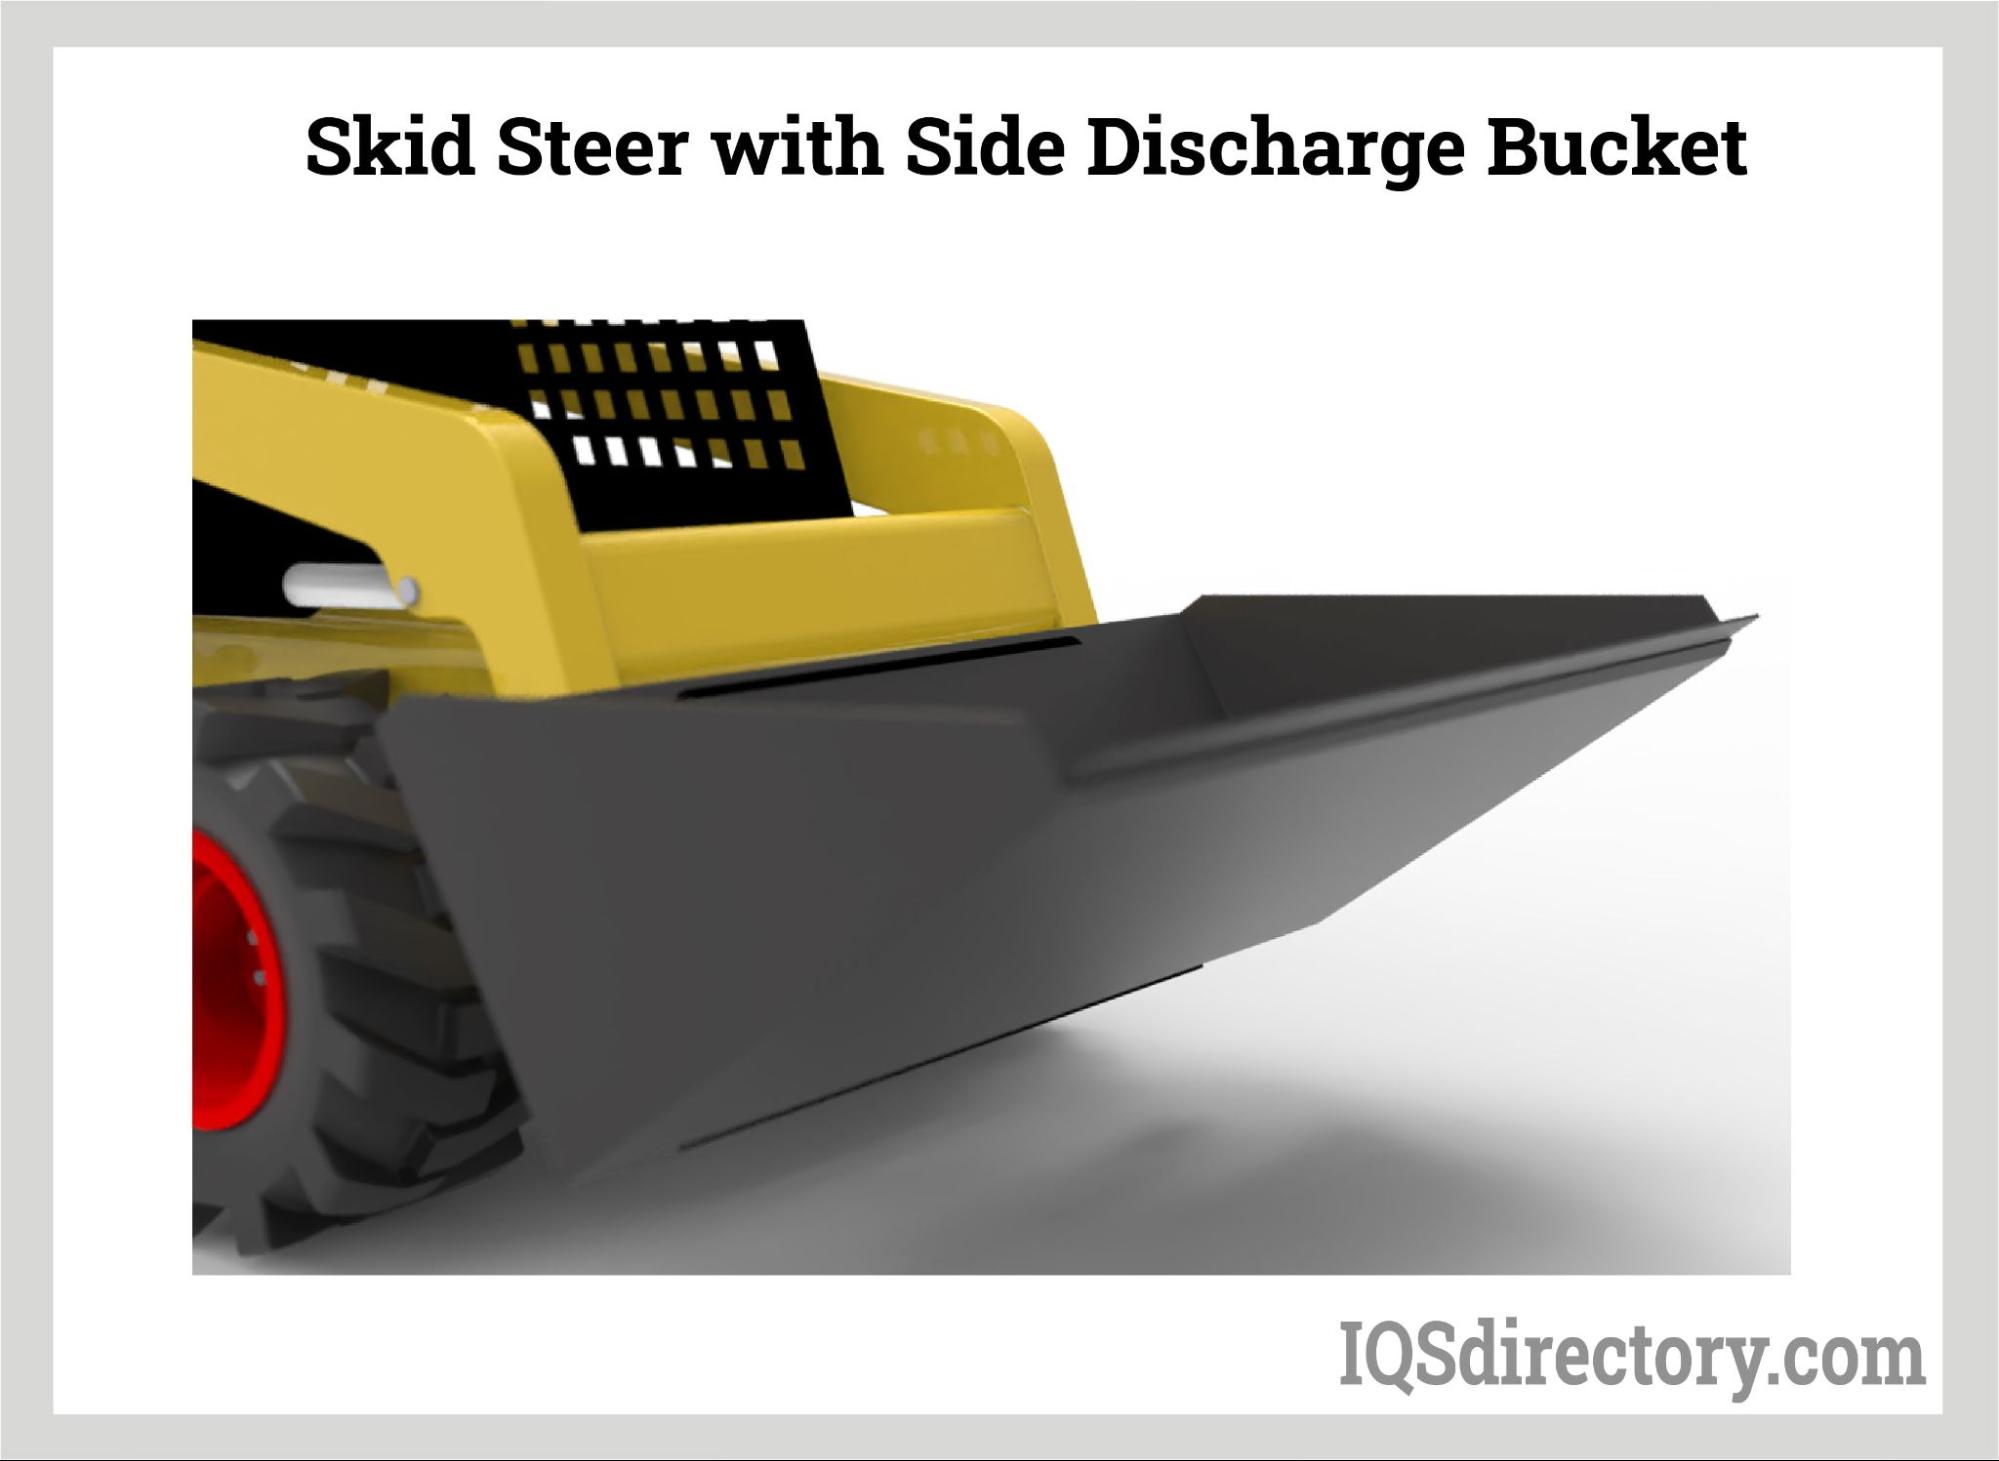 Skid Steer with Side Discharge Bucket